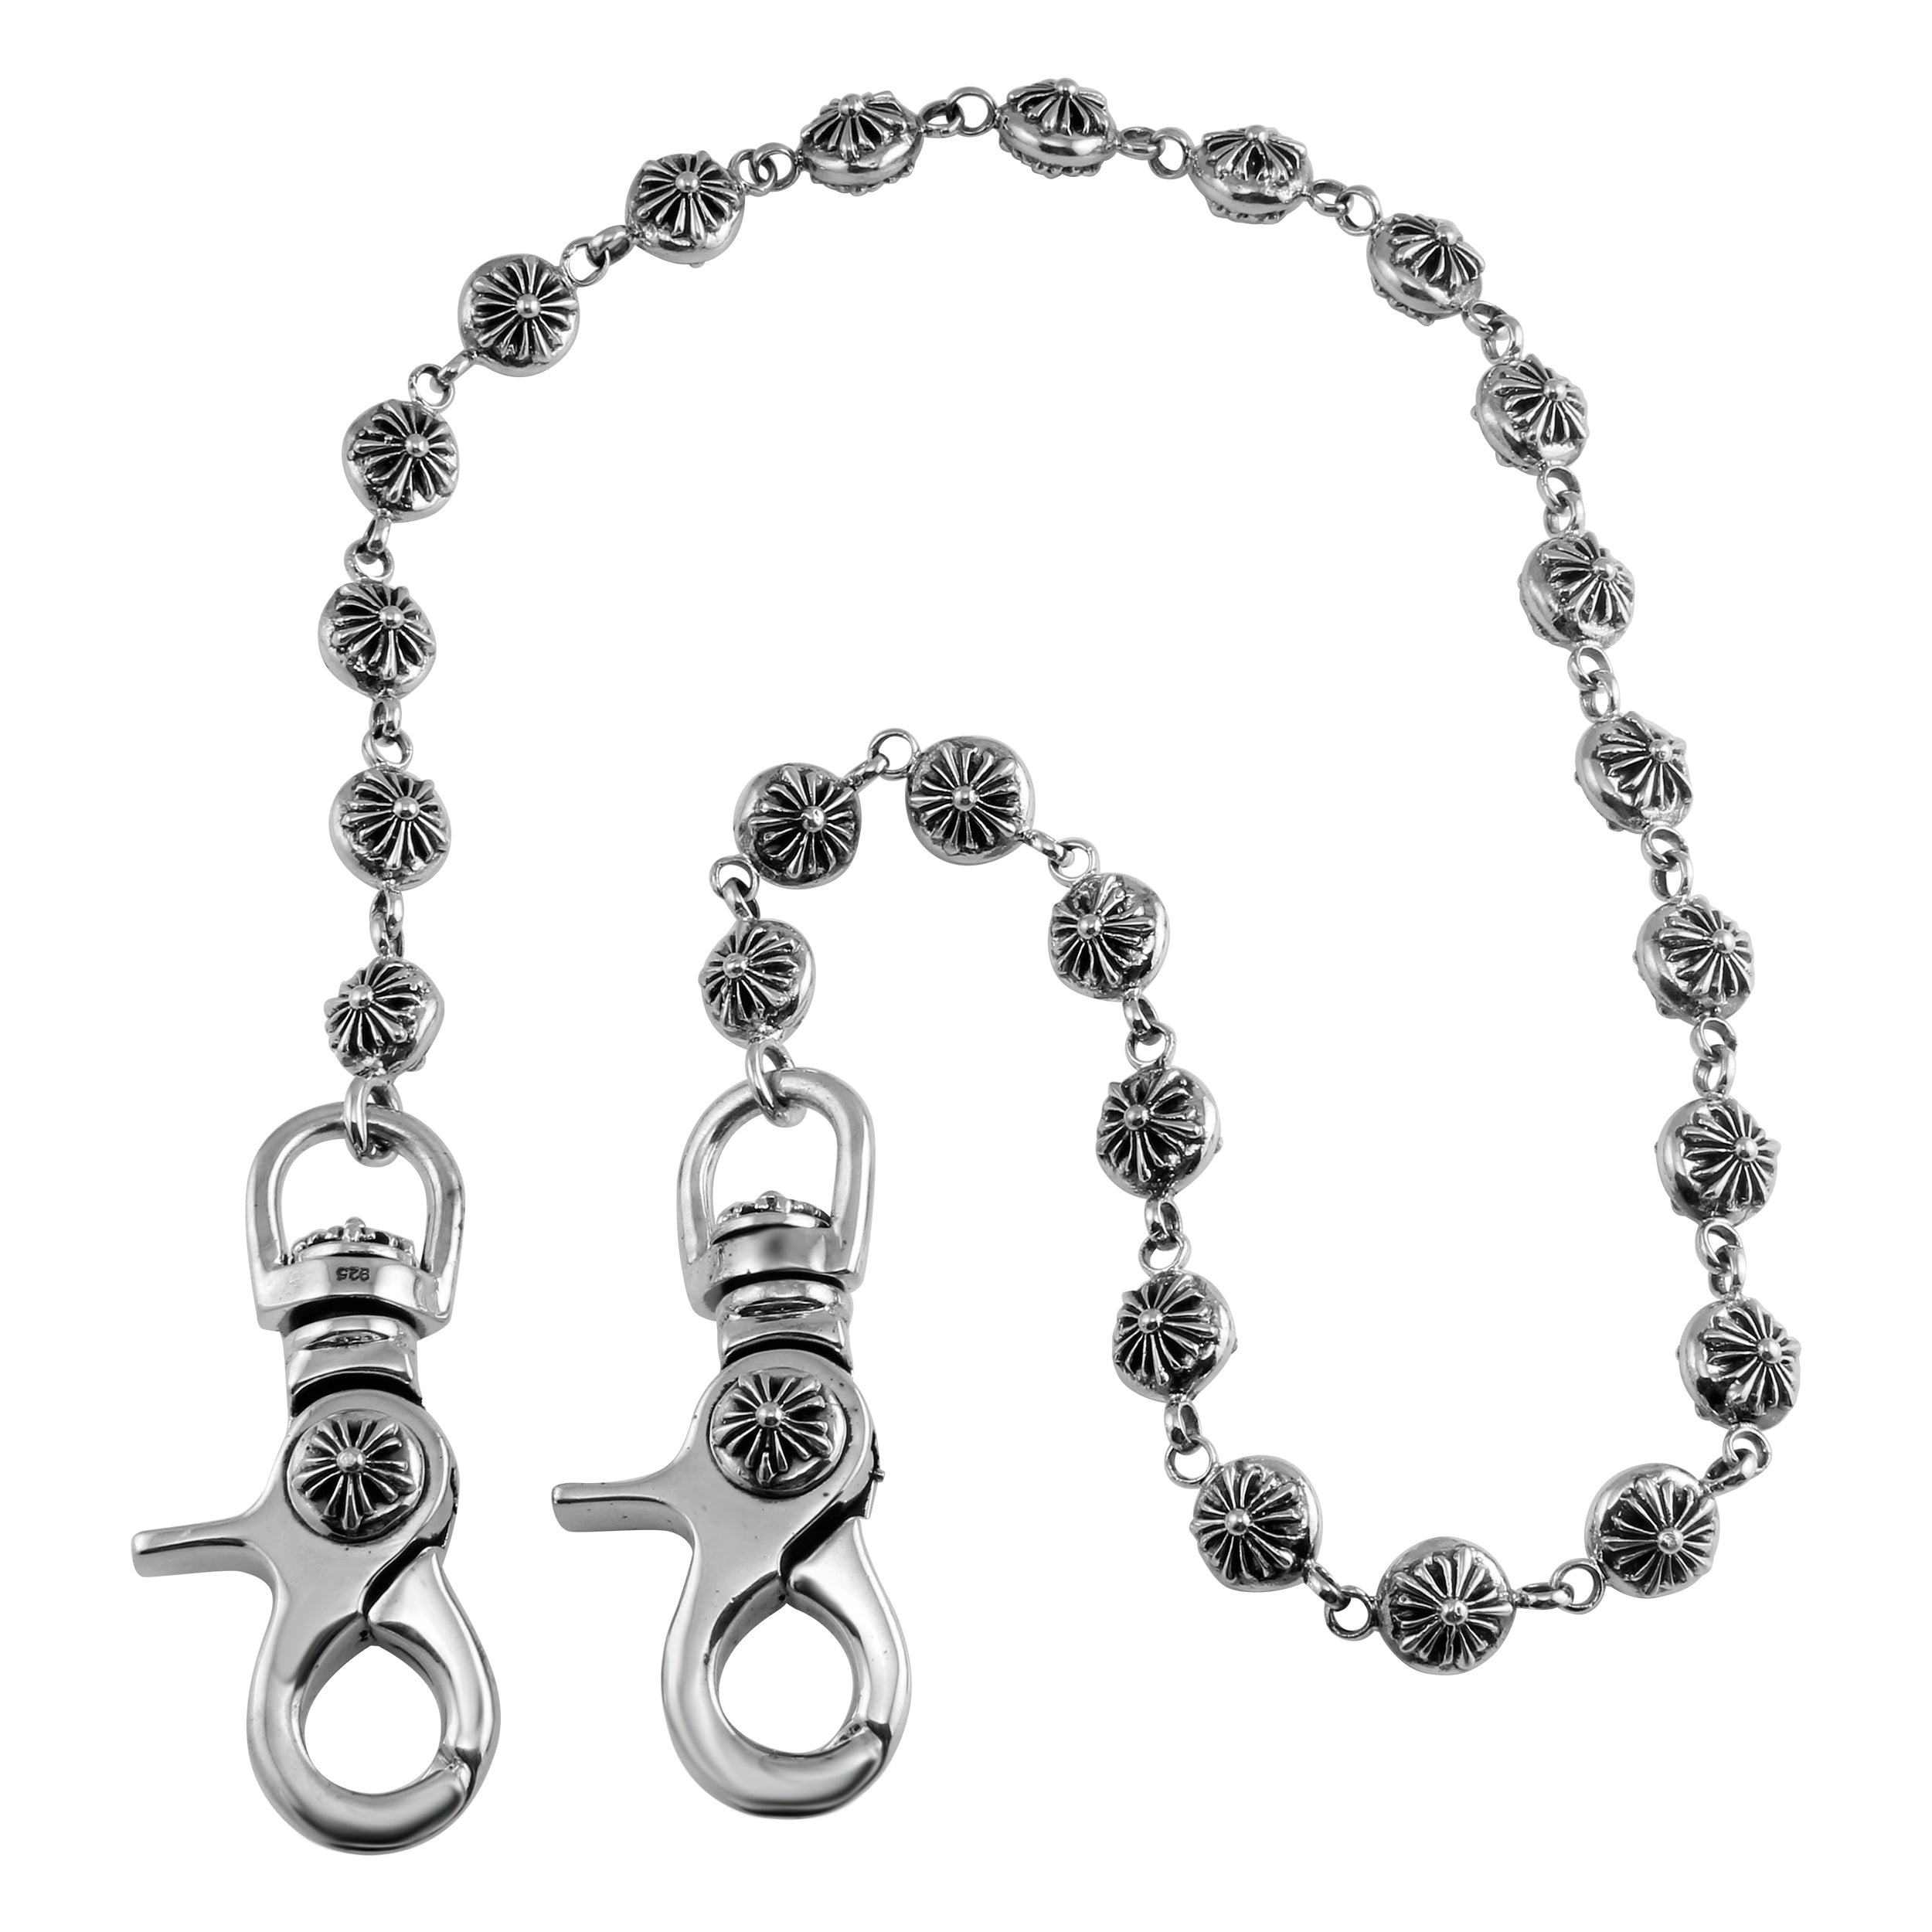 Bead Chain – 12 pack